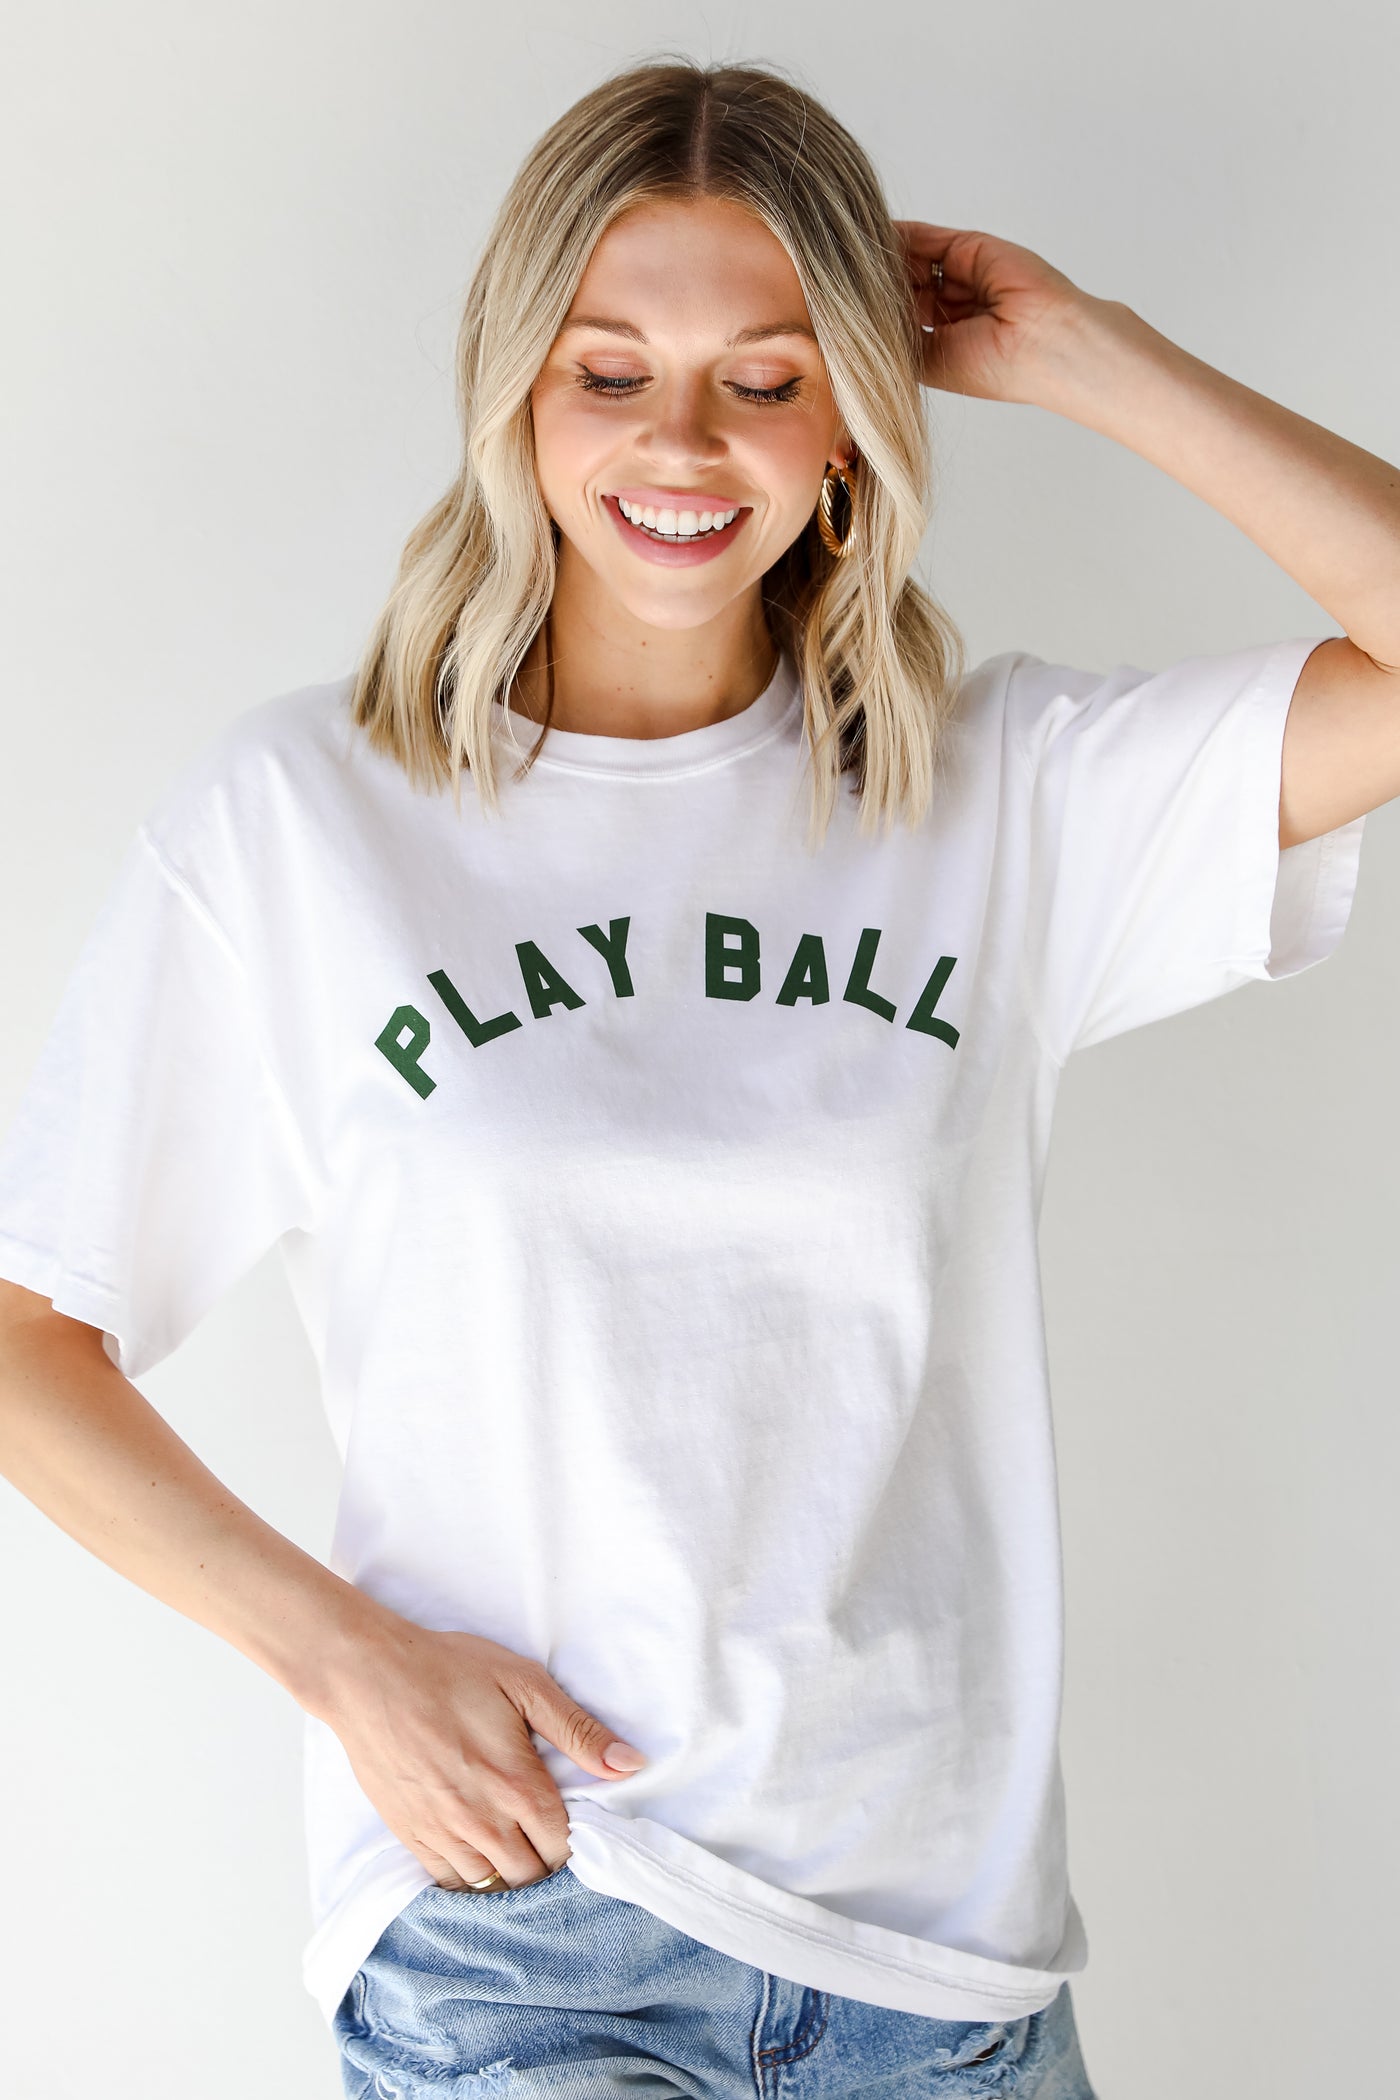 Play Ball Tee on model